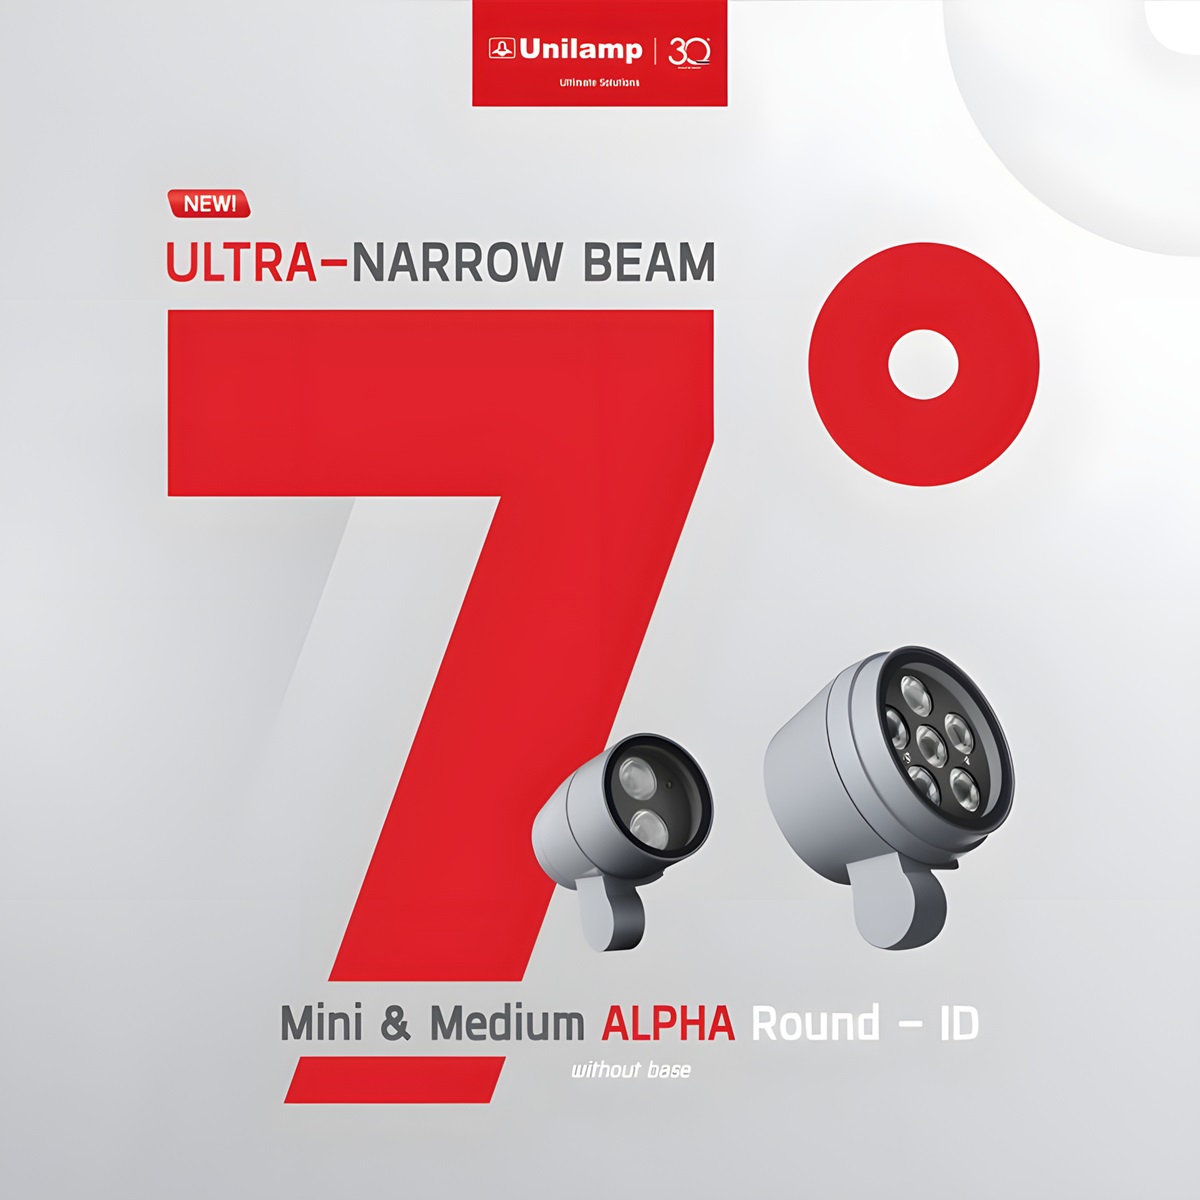 Unilamp Introduces The 7° Ultra-Narrow Beam Spotlight